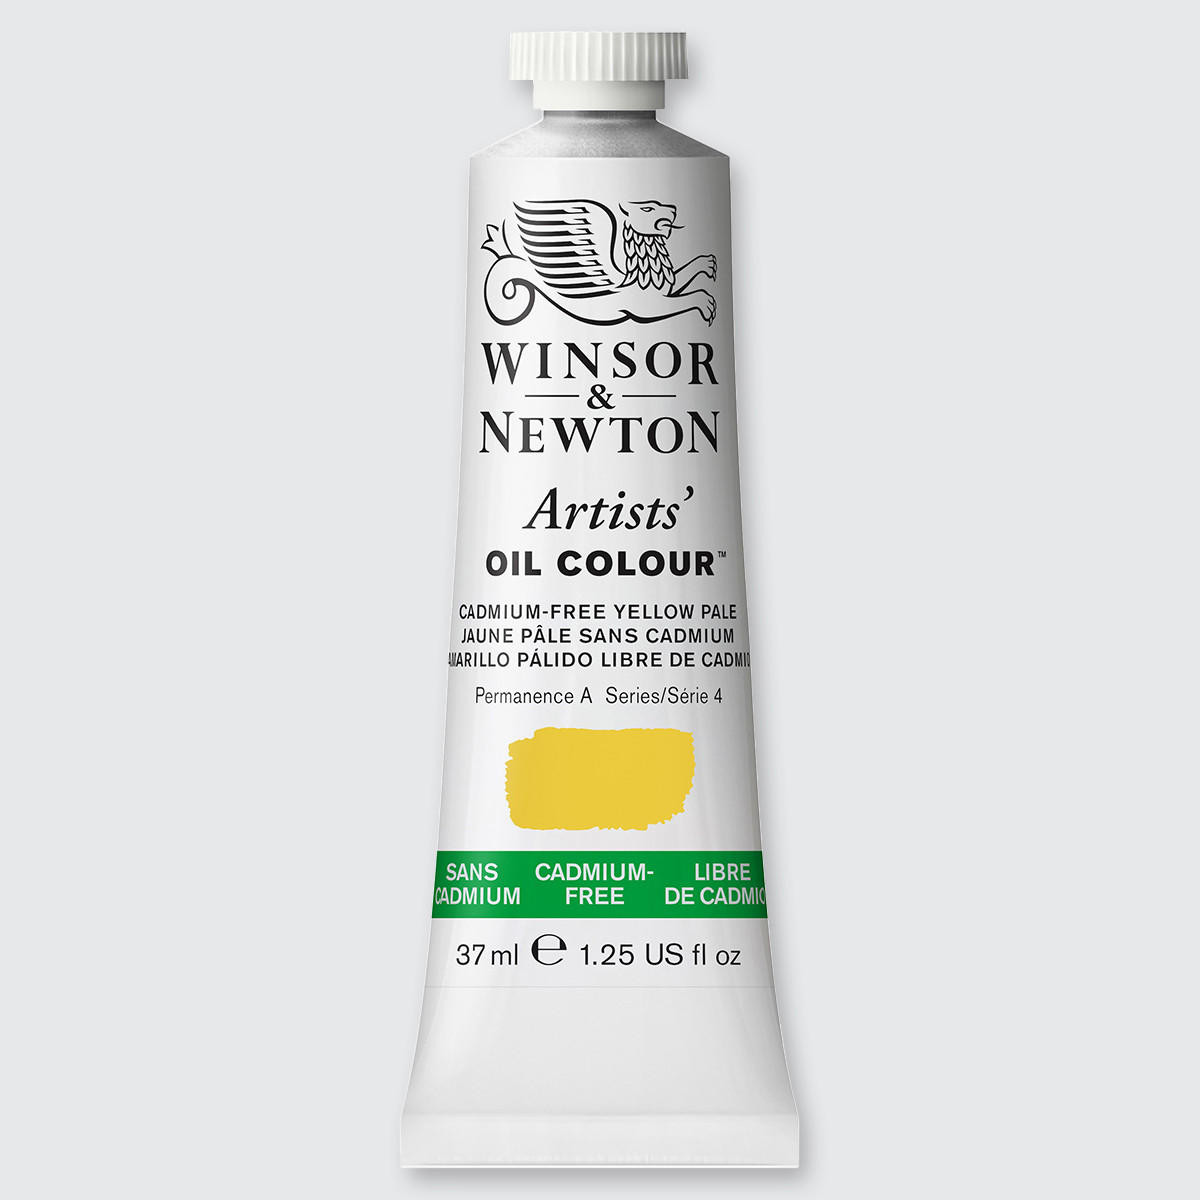 Winsor & Newton Artists’ Oil Colour 37ml Cadmium Free Yellow Pale